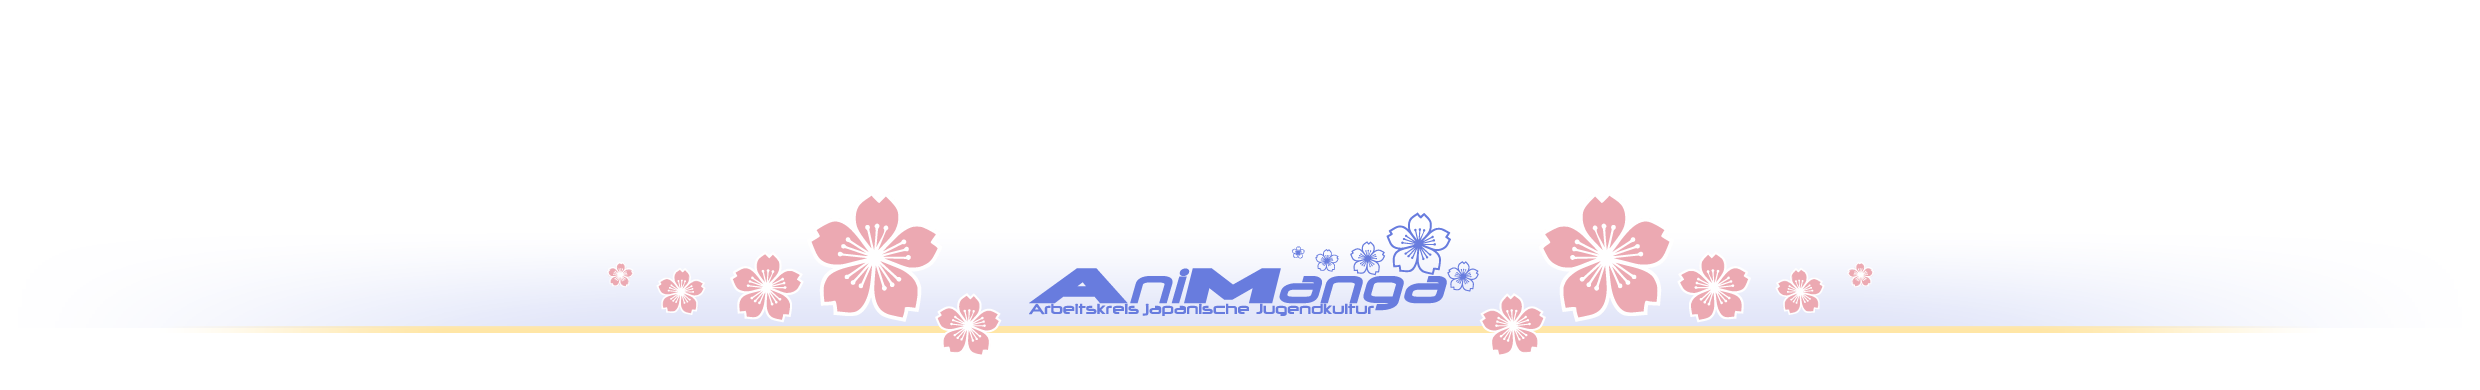 AniManga Austria - Arbeitskreis japanische Jugendkultur